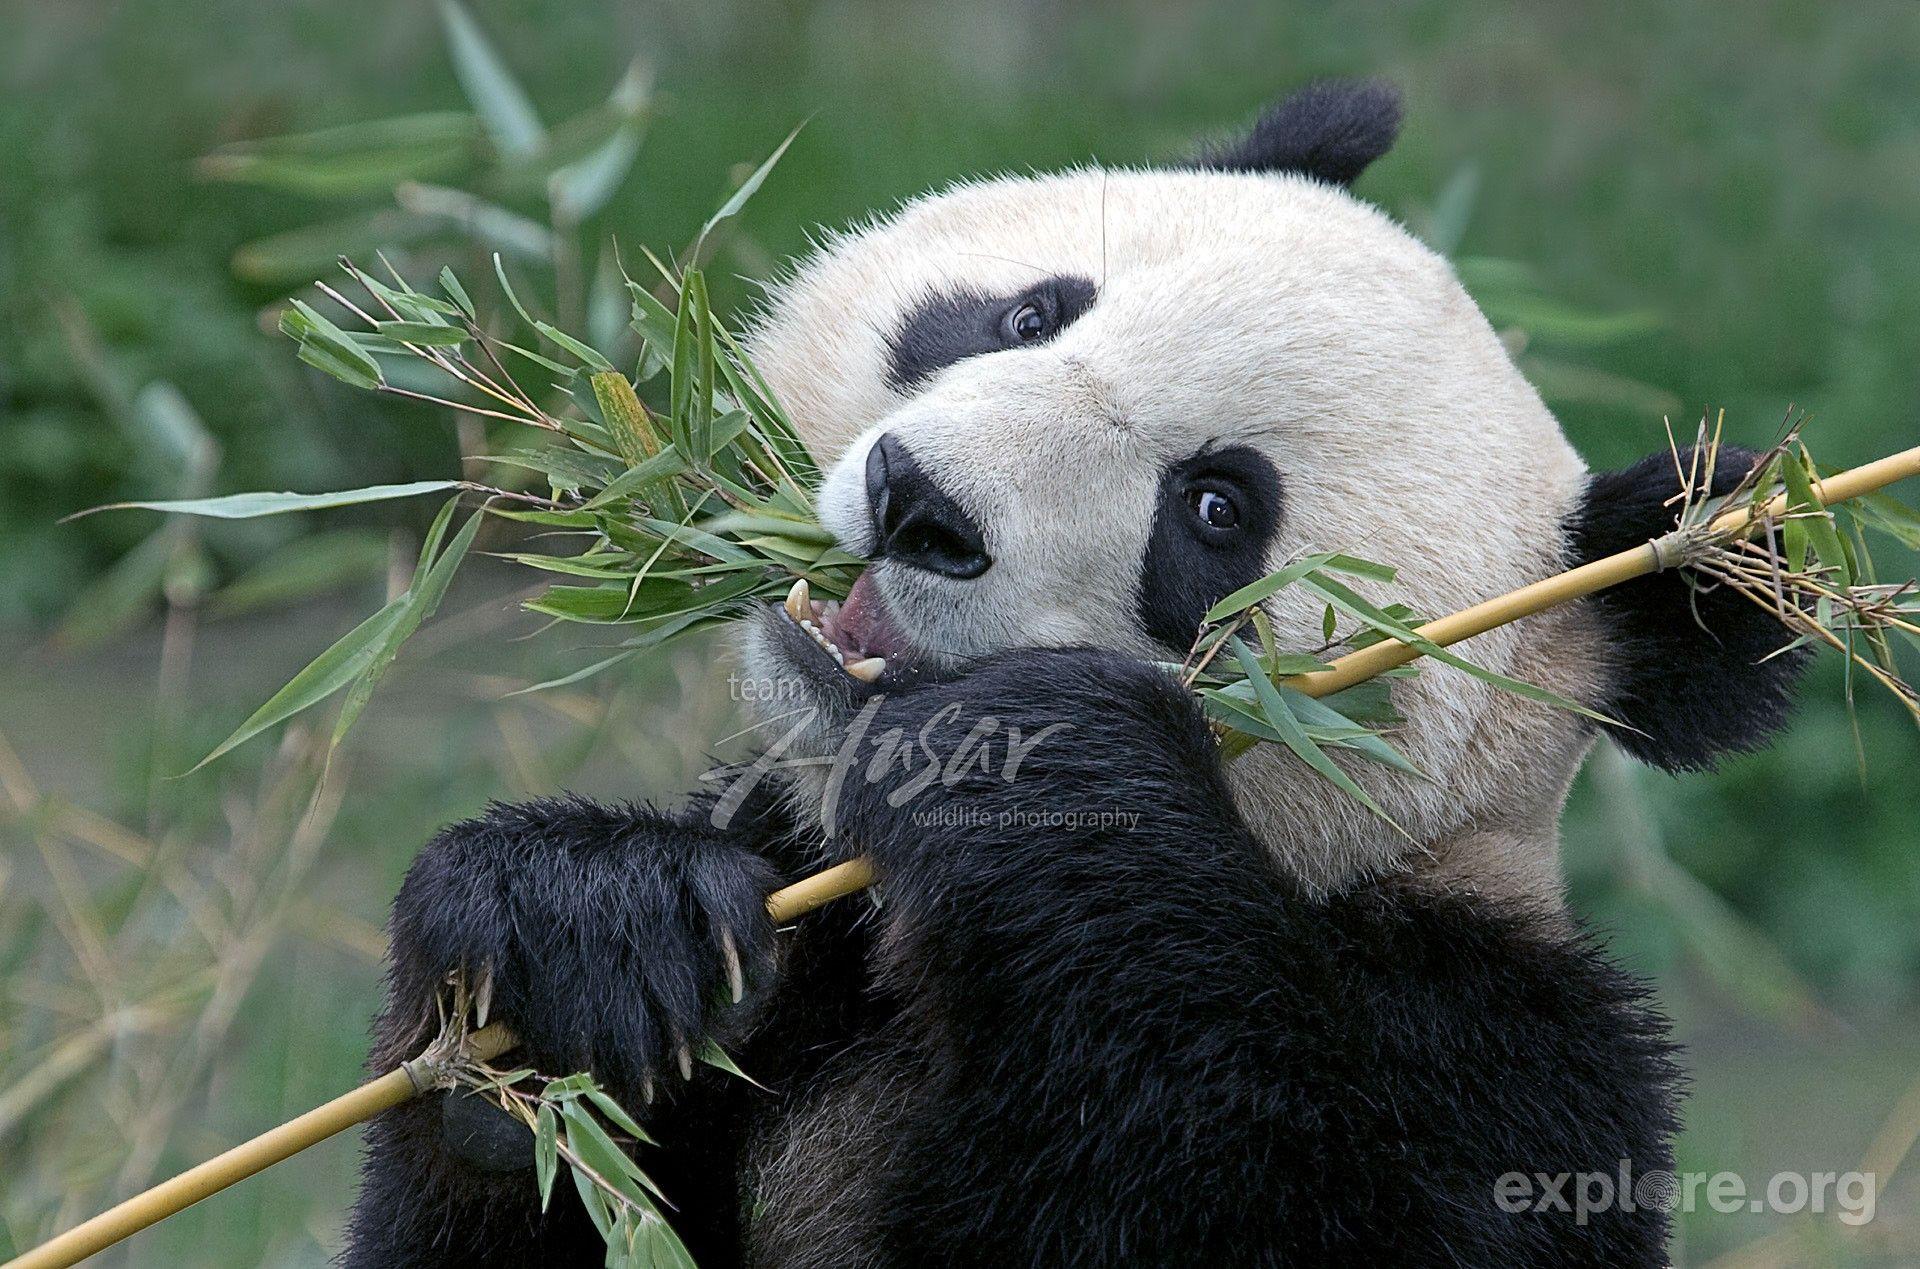 Panda Eating Wallpapers - Top Free Panda Eating Backgrounds ...